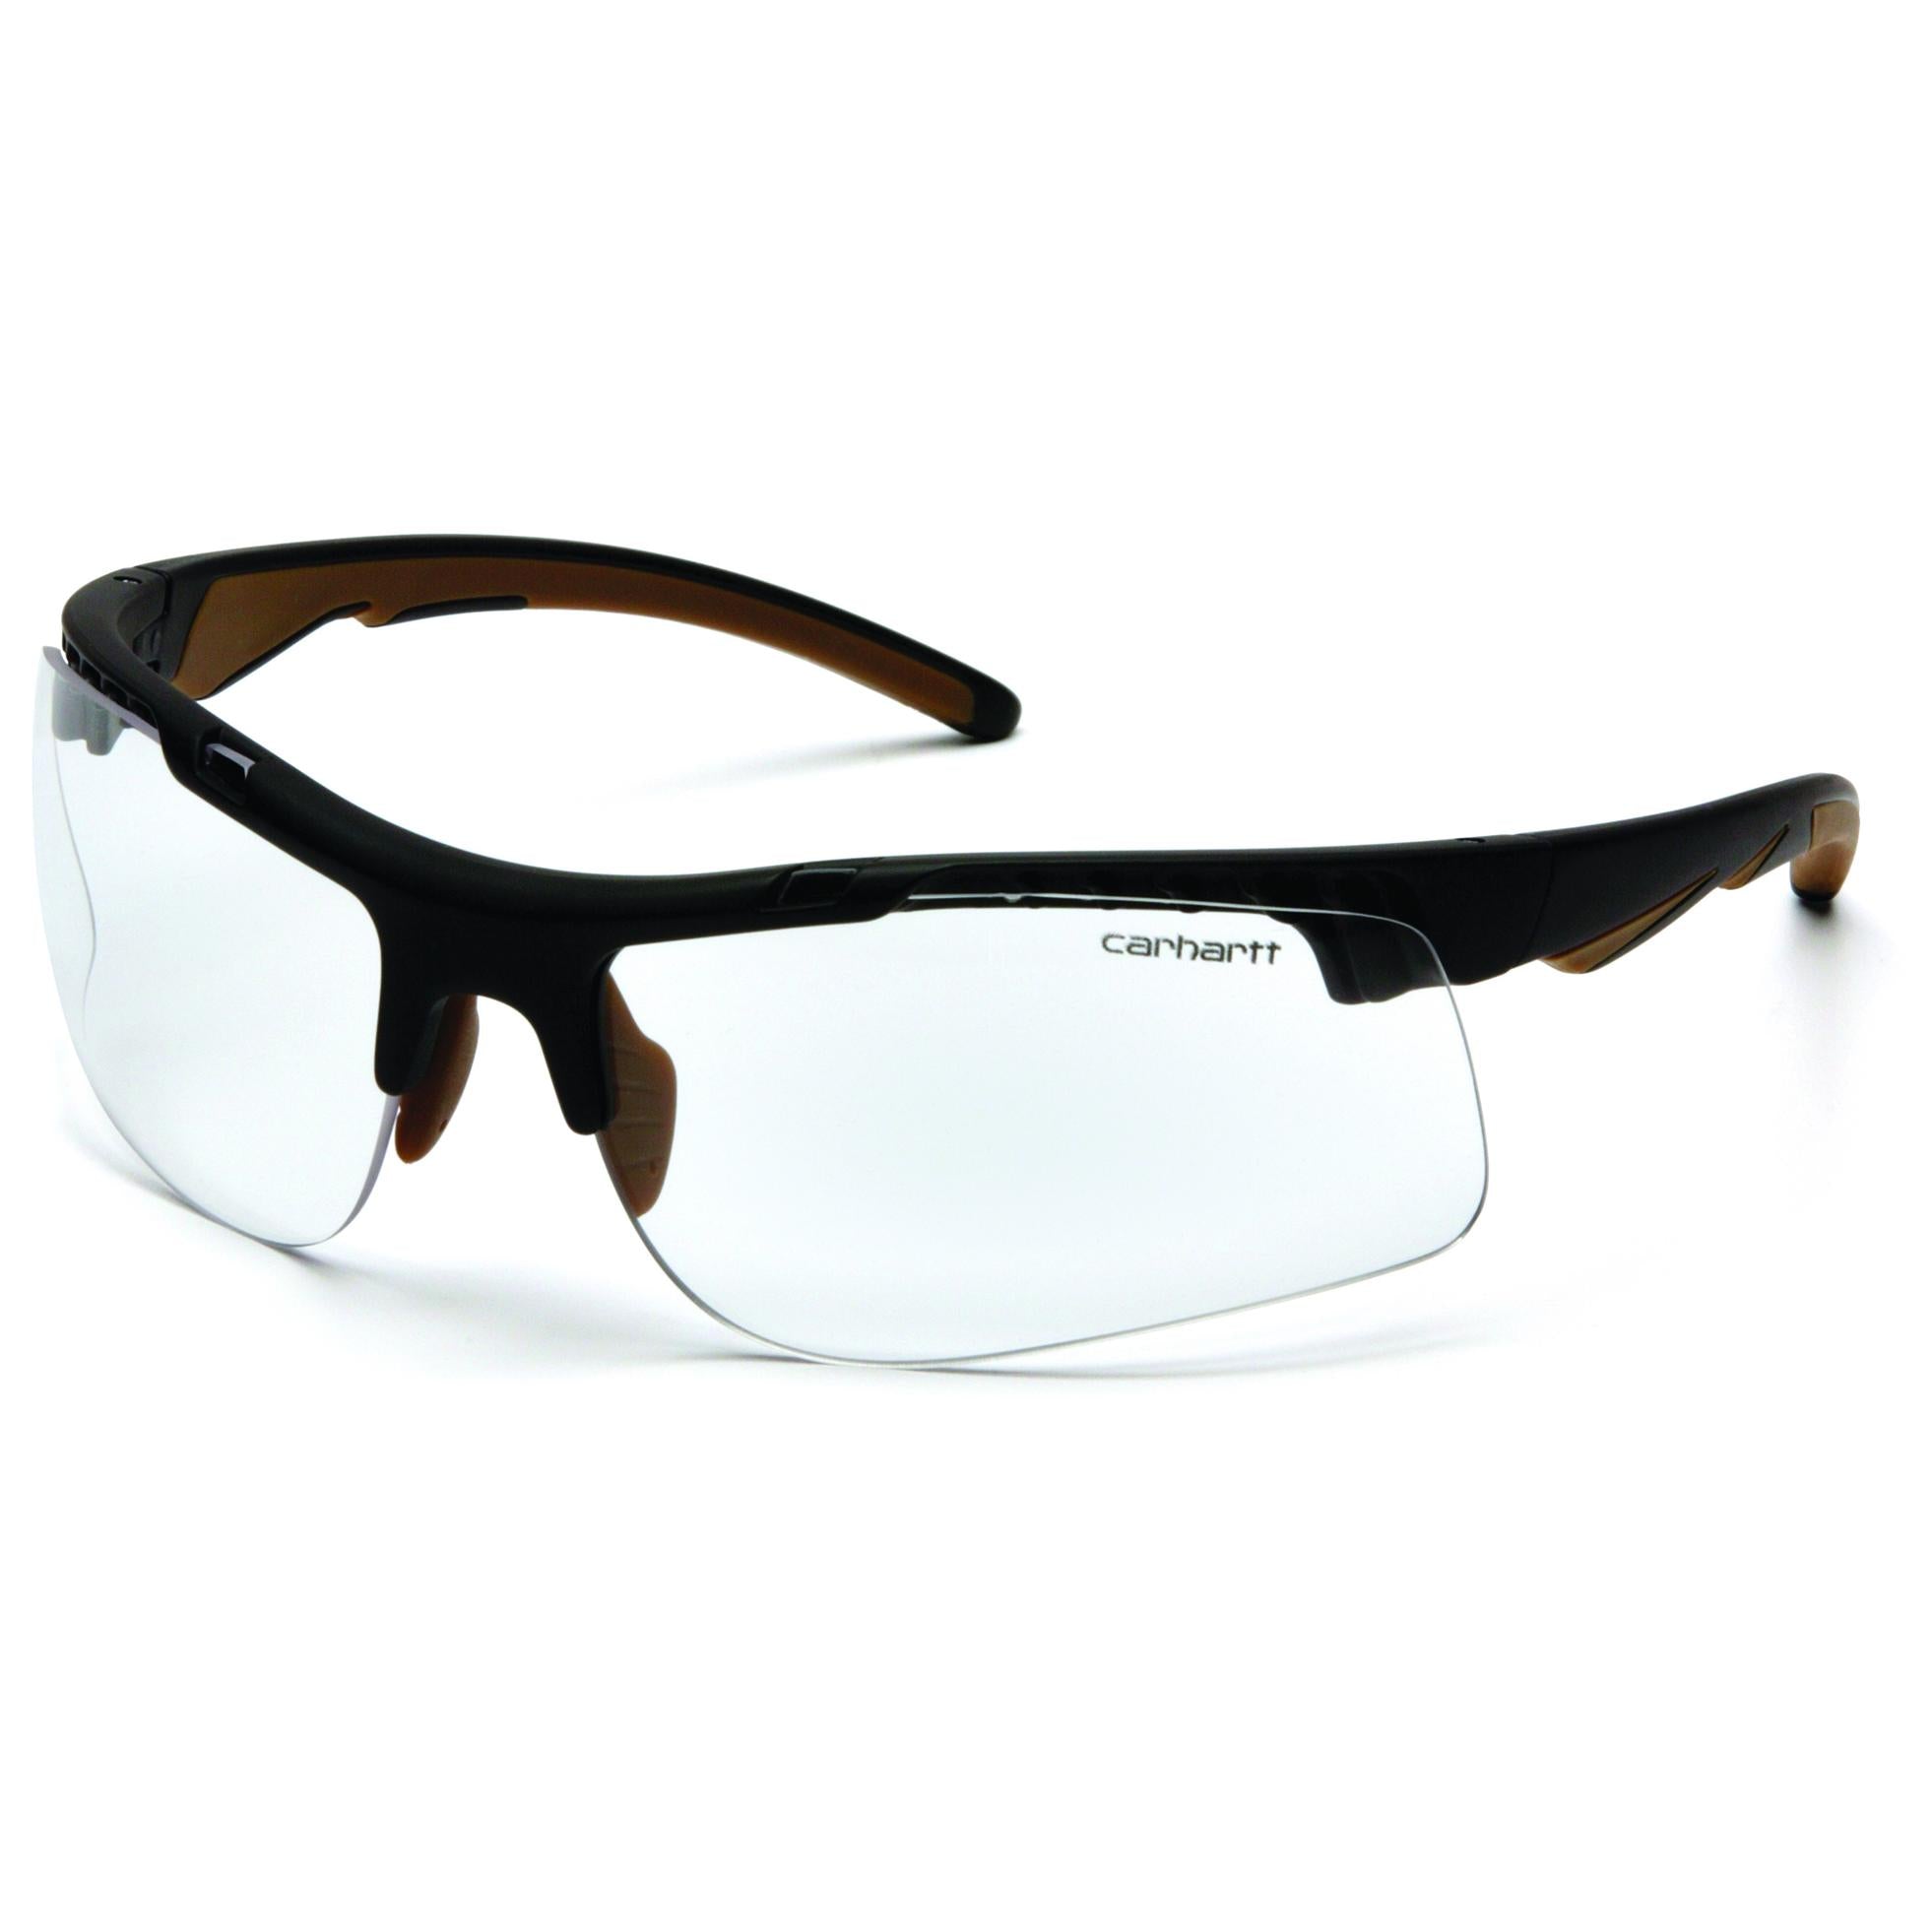 Carhartt Rockwood Safety Glasses